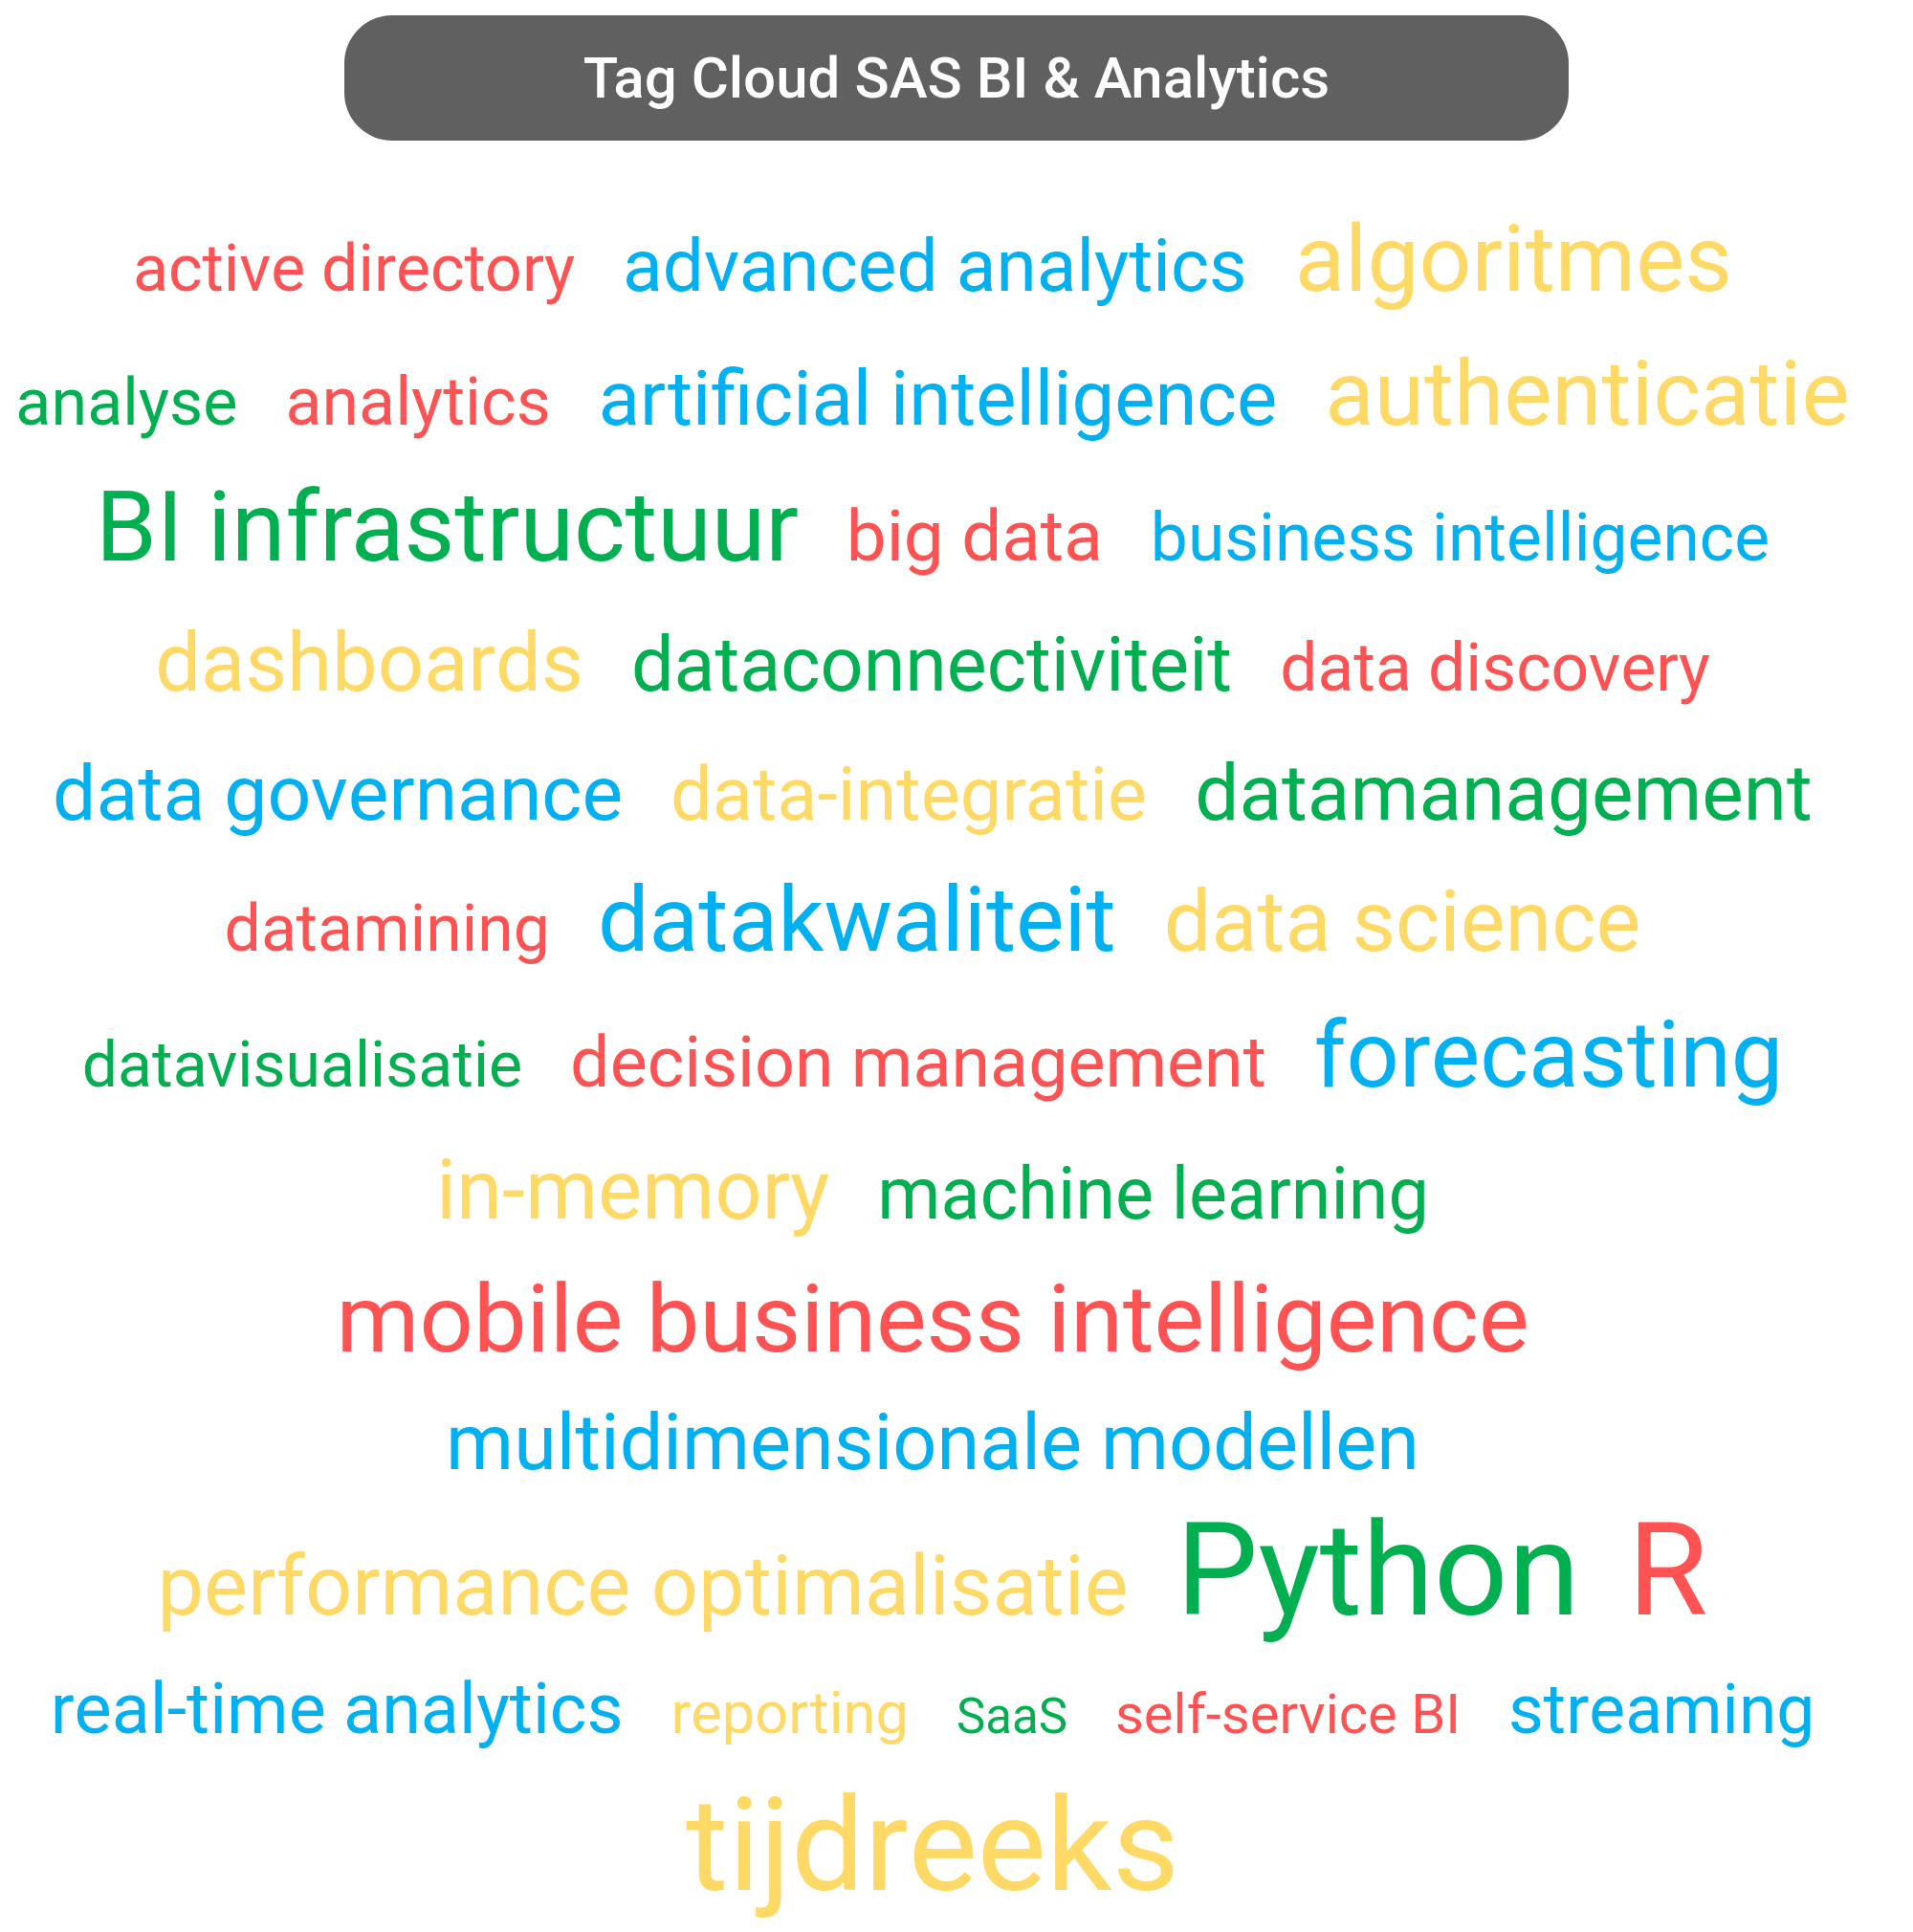 Tag cloud van SAS Business Analytics tools.